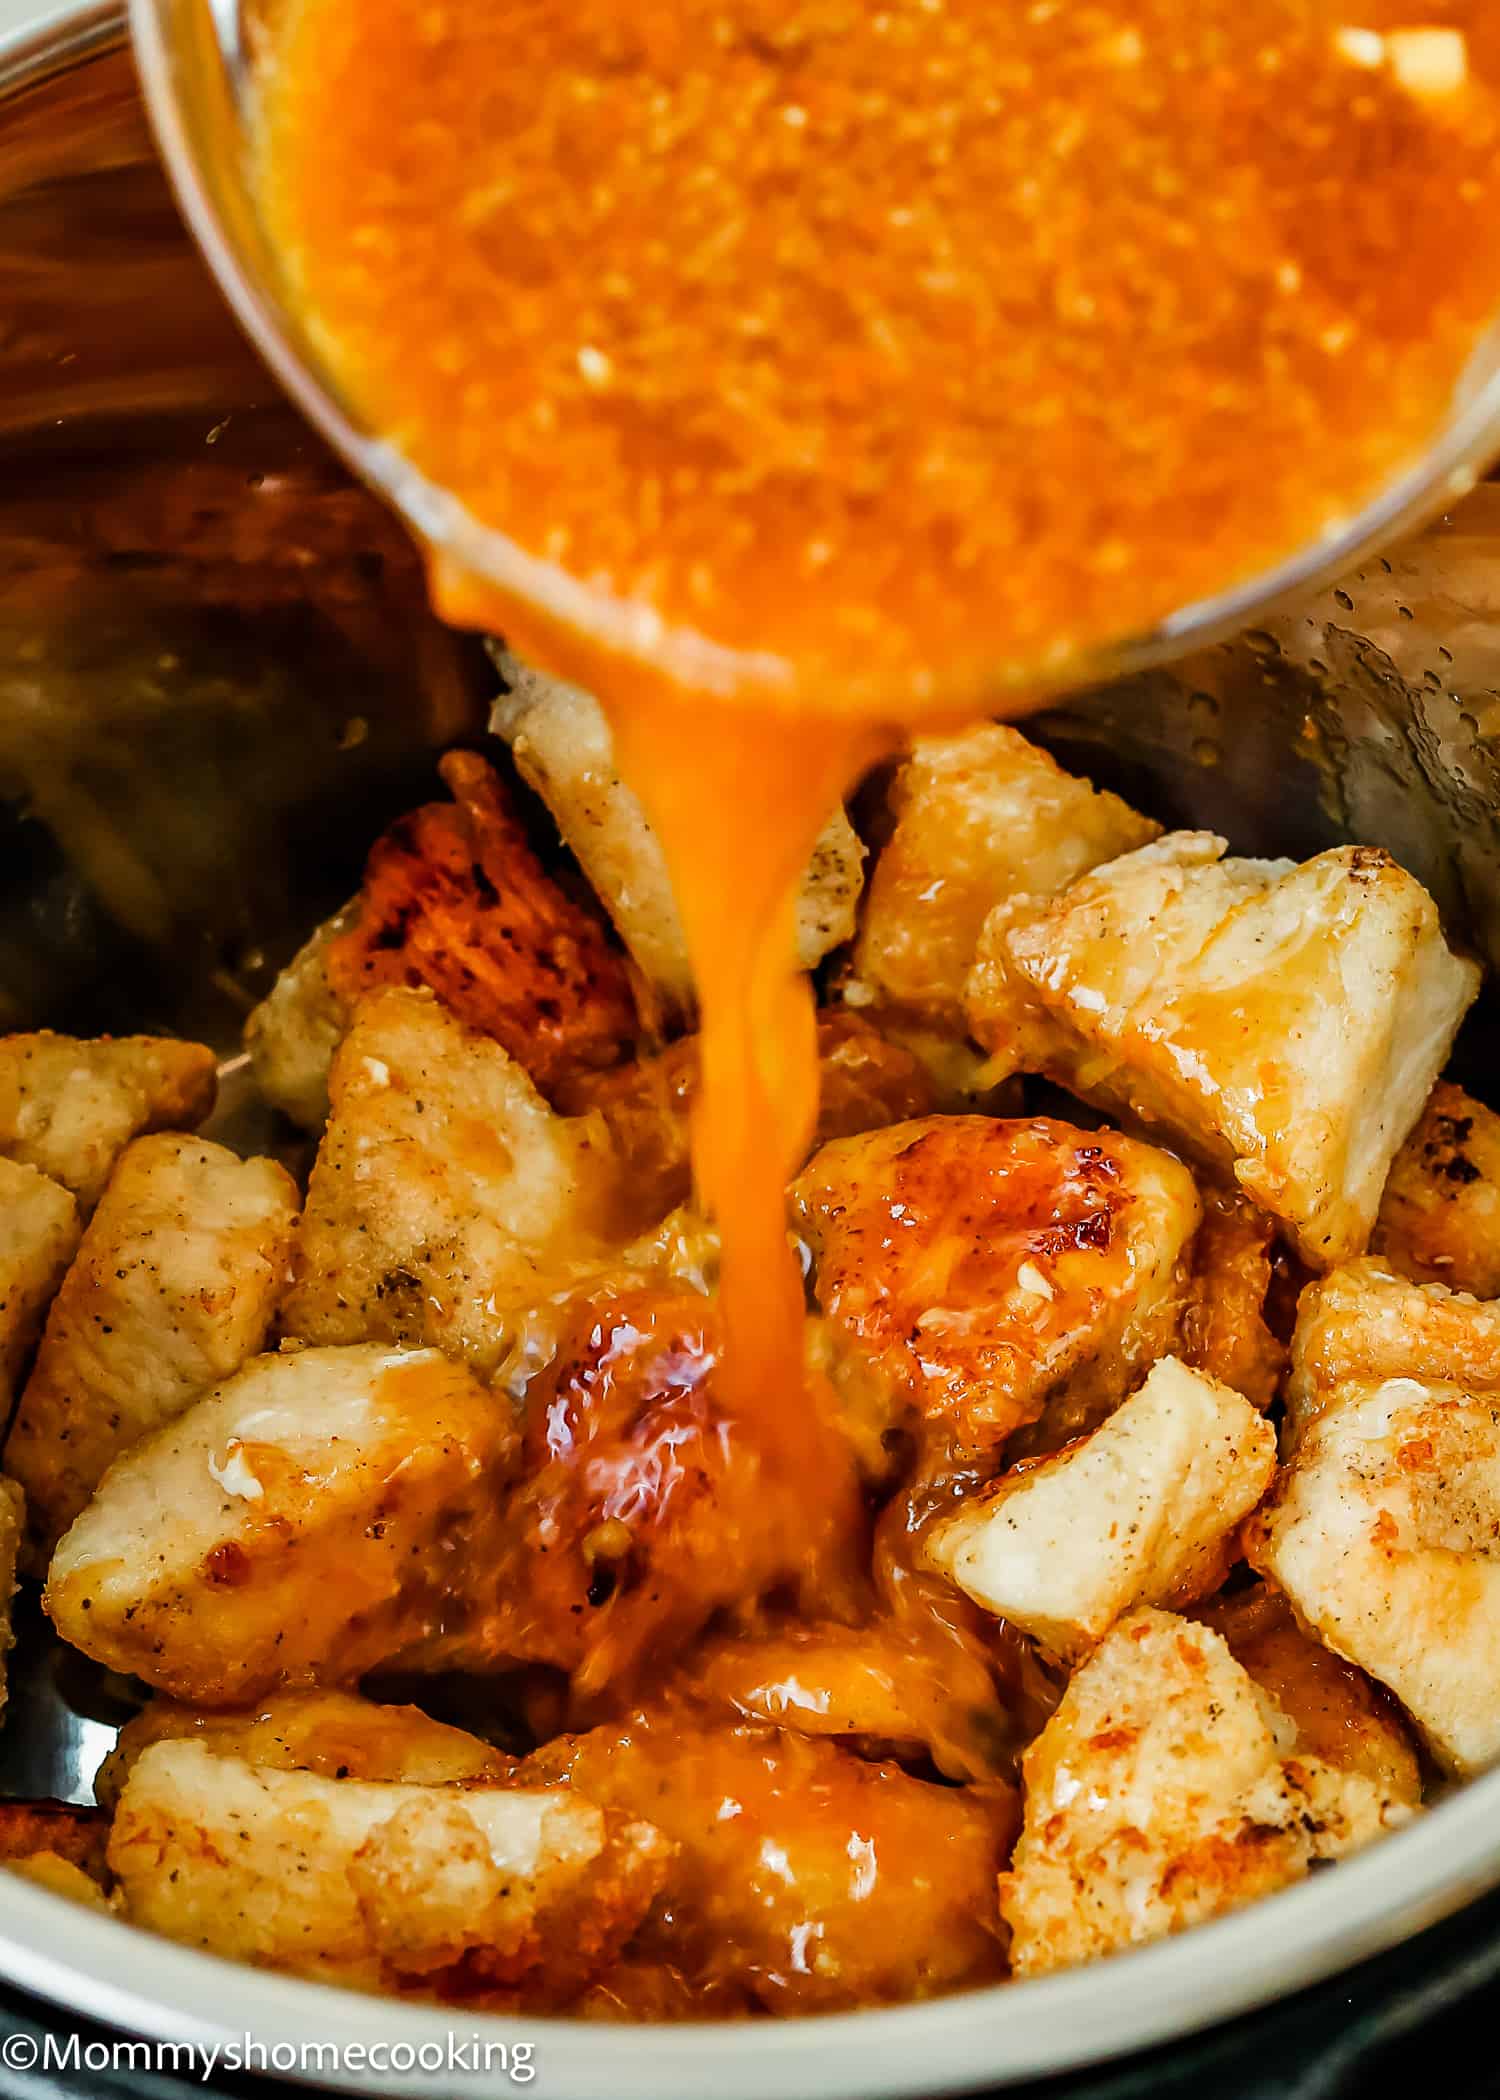 orange sauce being poured over cooked chicken to make homemade orange chicken. 